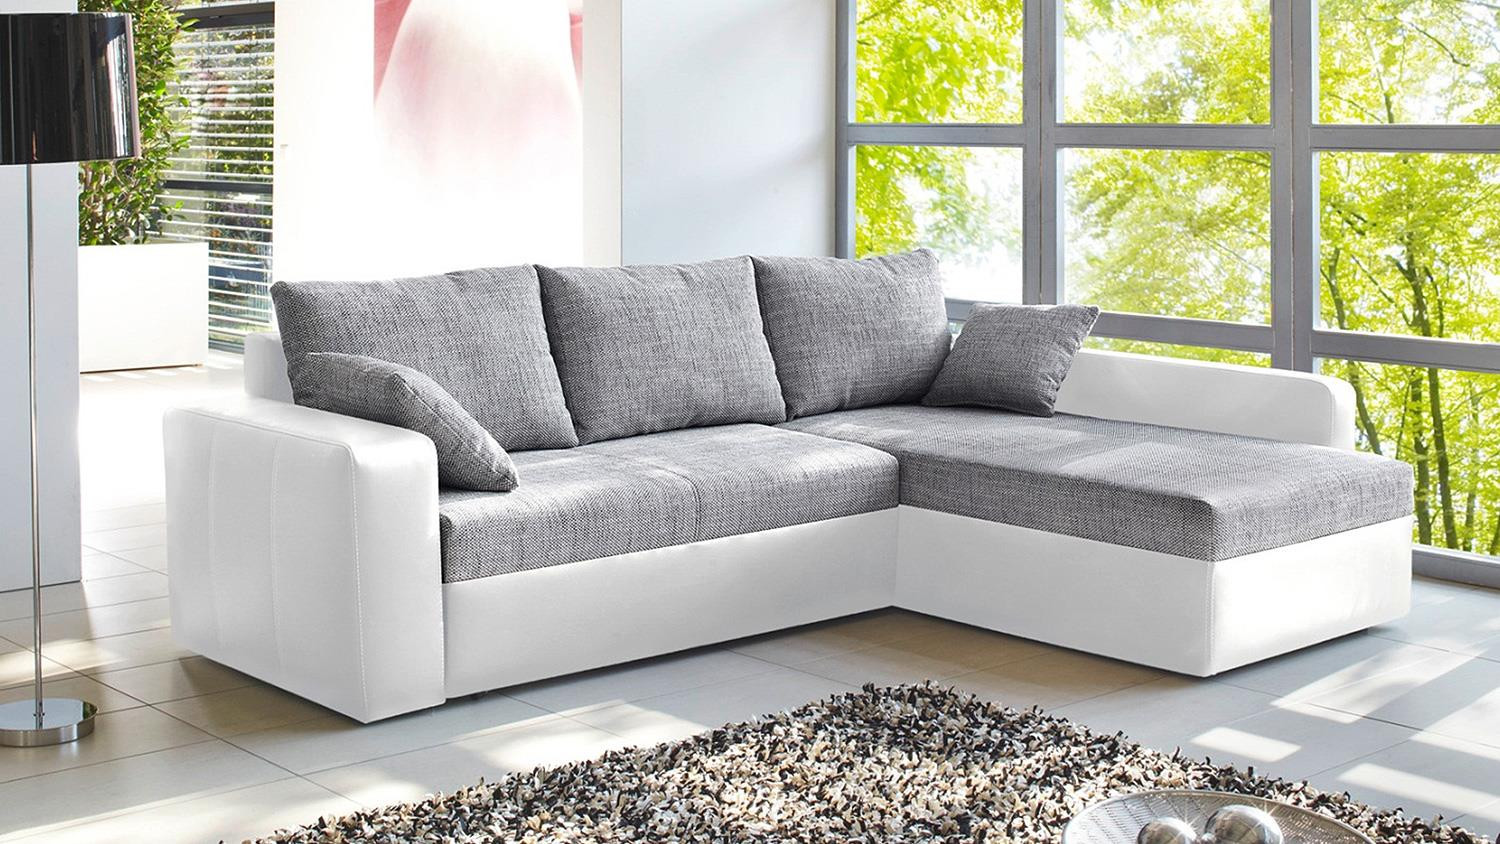 Sofa Weiß Grau
 Ecksofa VIPER Sofa in weiß und grau mit Bettfunktion